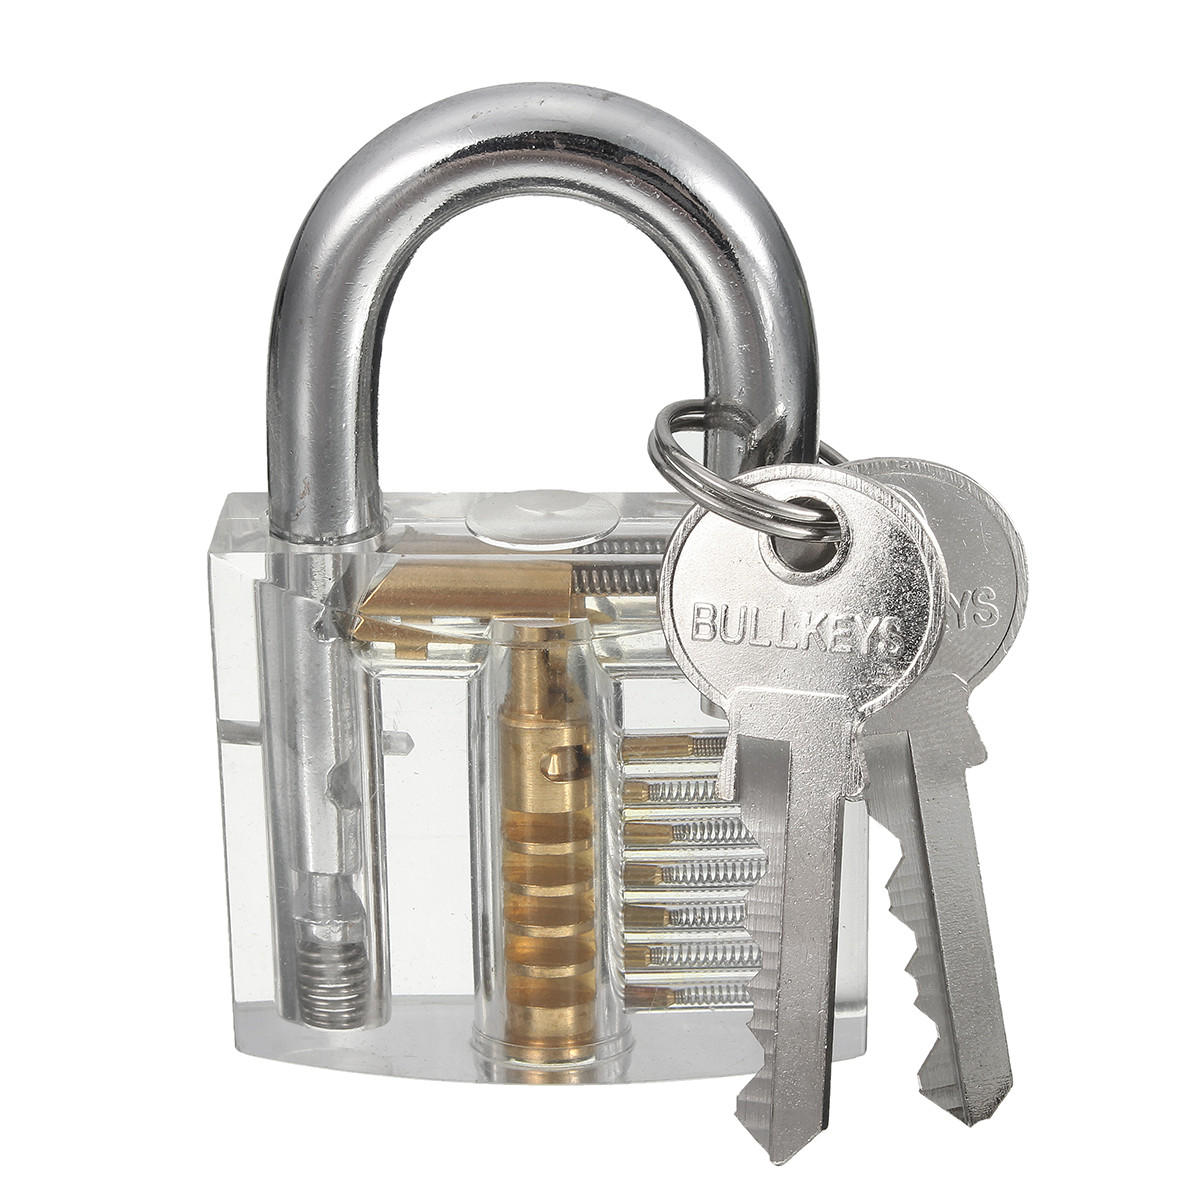 DANIU-24pcs-Single-Hook-Lock-Pick-Set-with-1Pc-Transparent-Lock-Locksmith-Practice-Training-Skill-Se-1194133-10